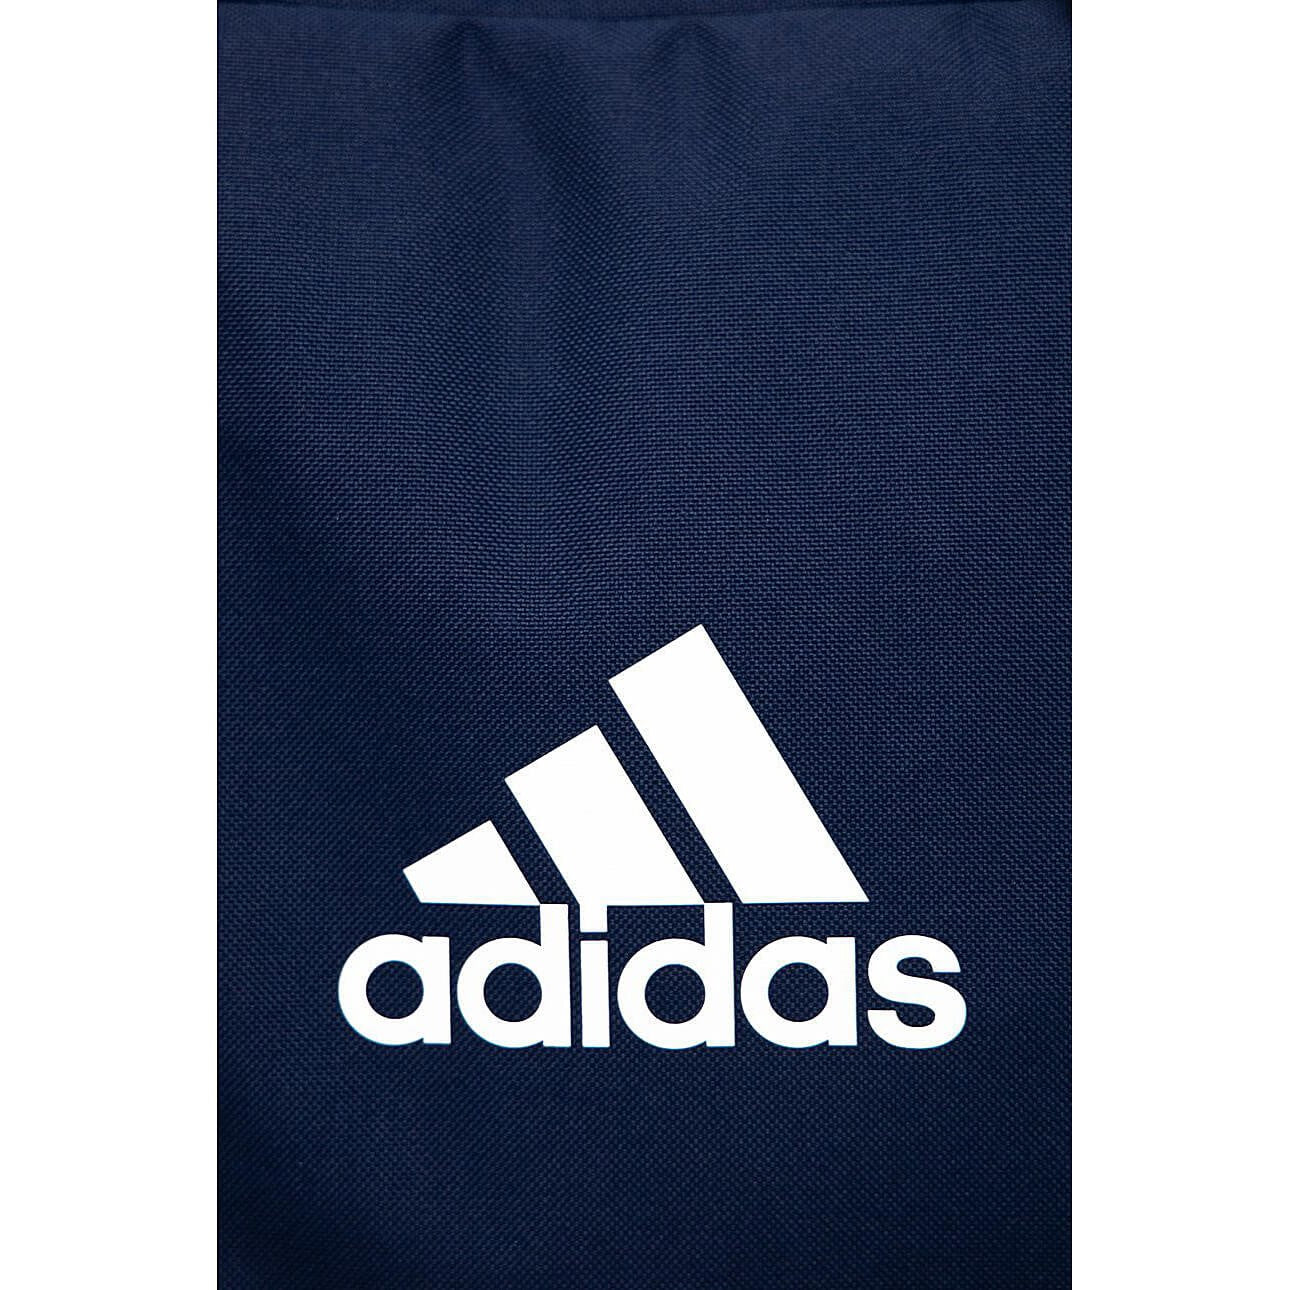 Adidas Tiro Duffel Bag - Large - Navy - 65 cm x 32 cm x 31 cm